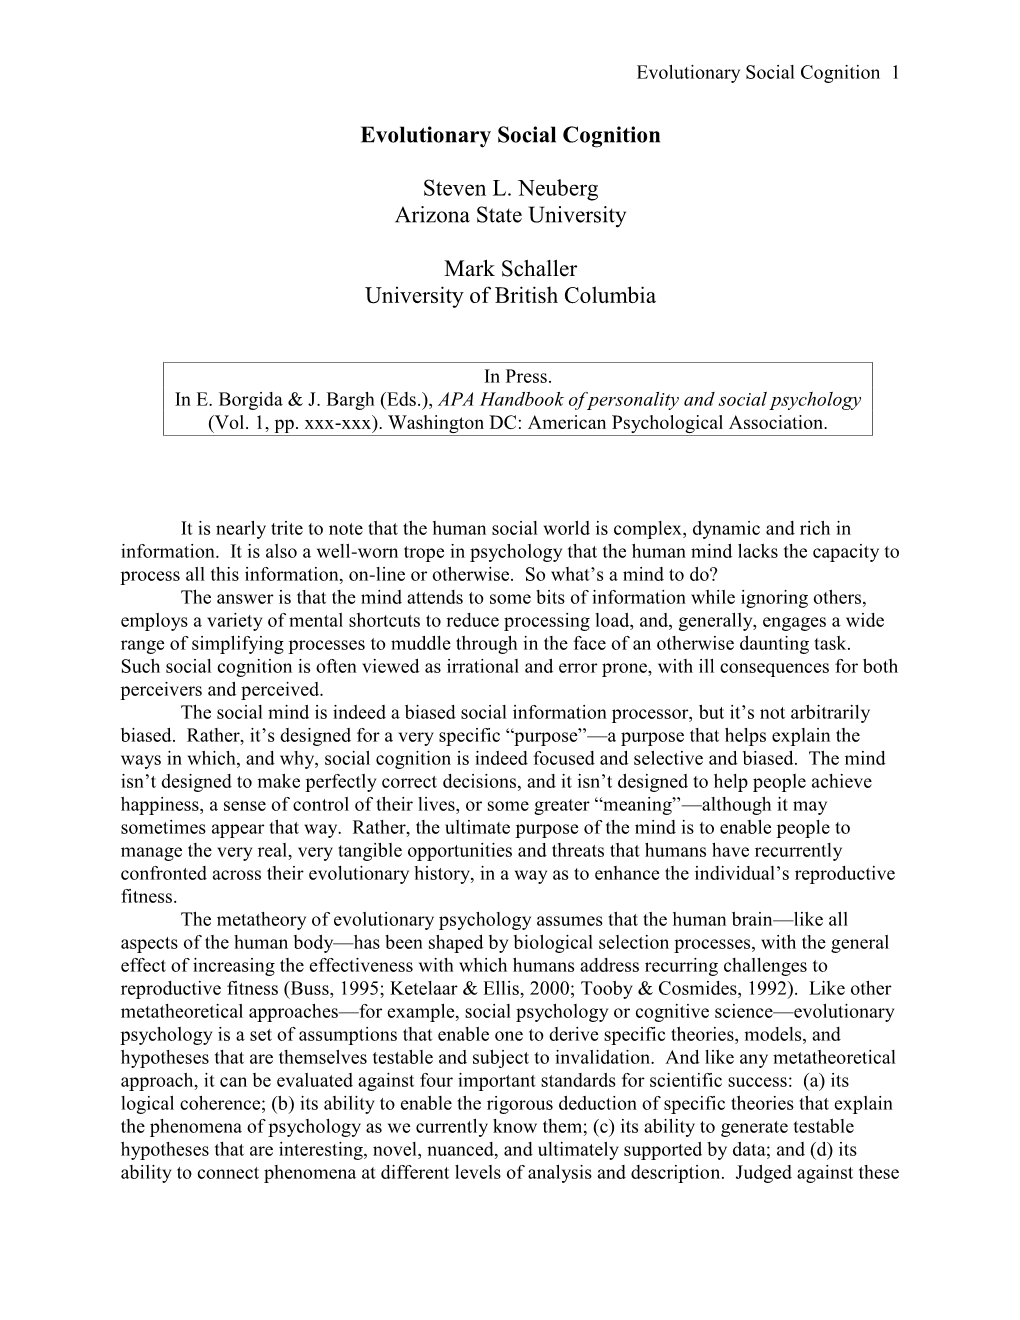 Evolutionary Social Cognition Steven L. Neuberg Arizona State University